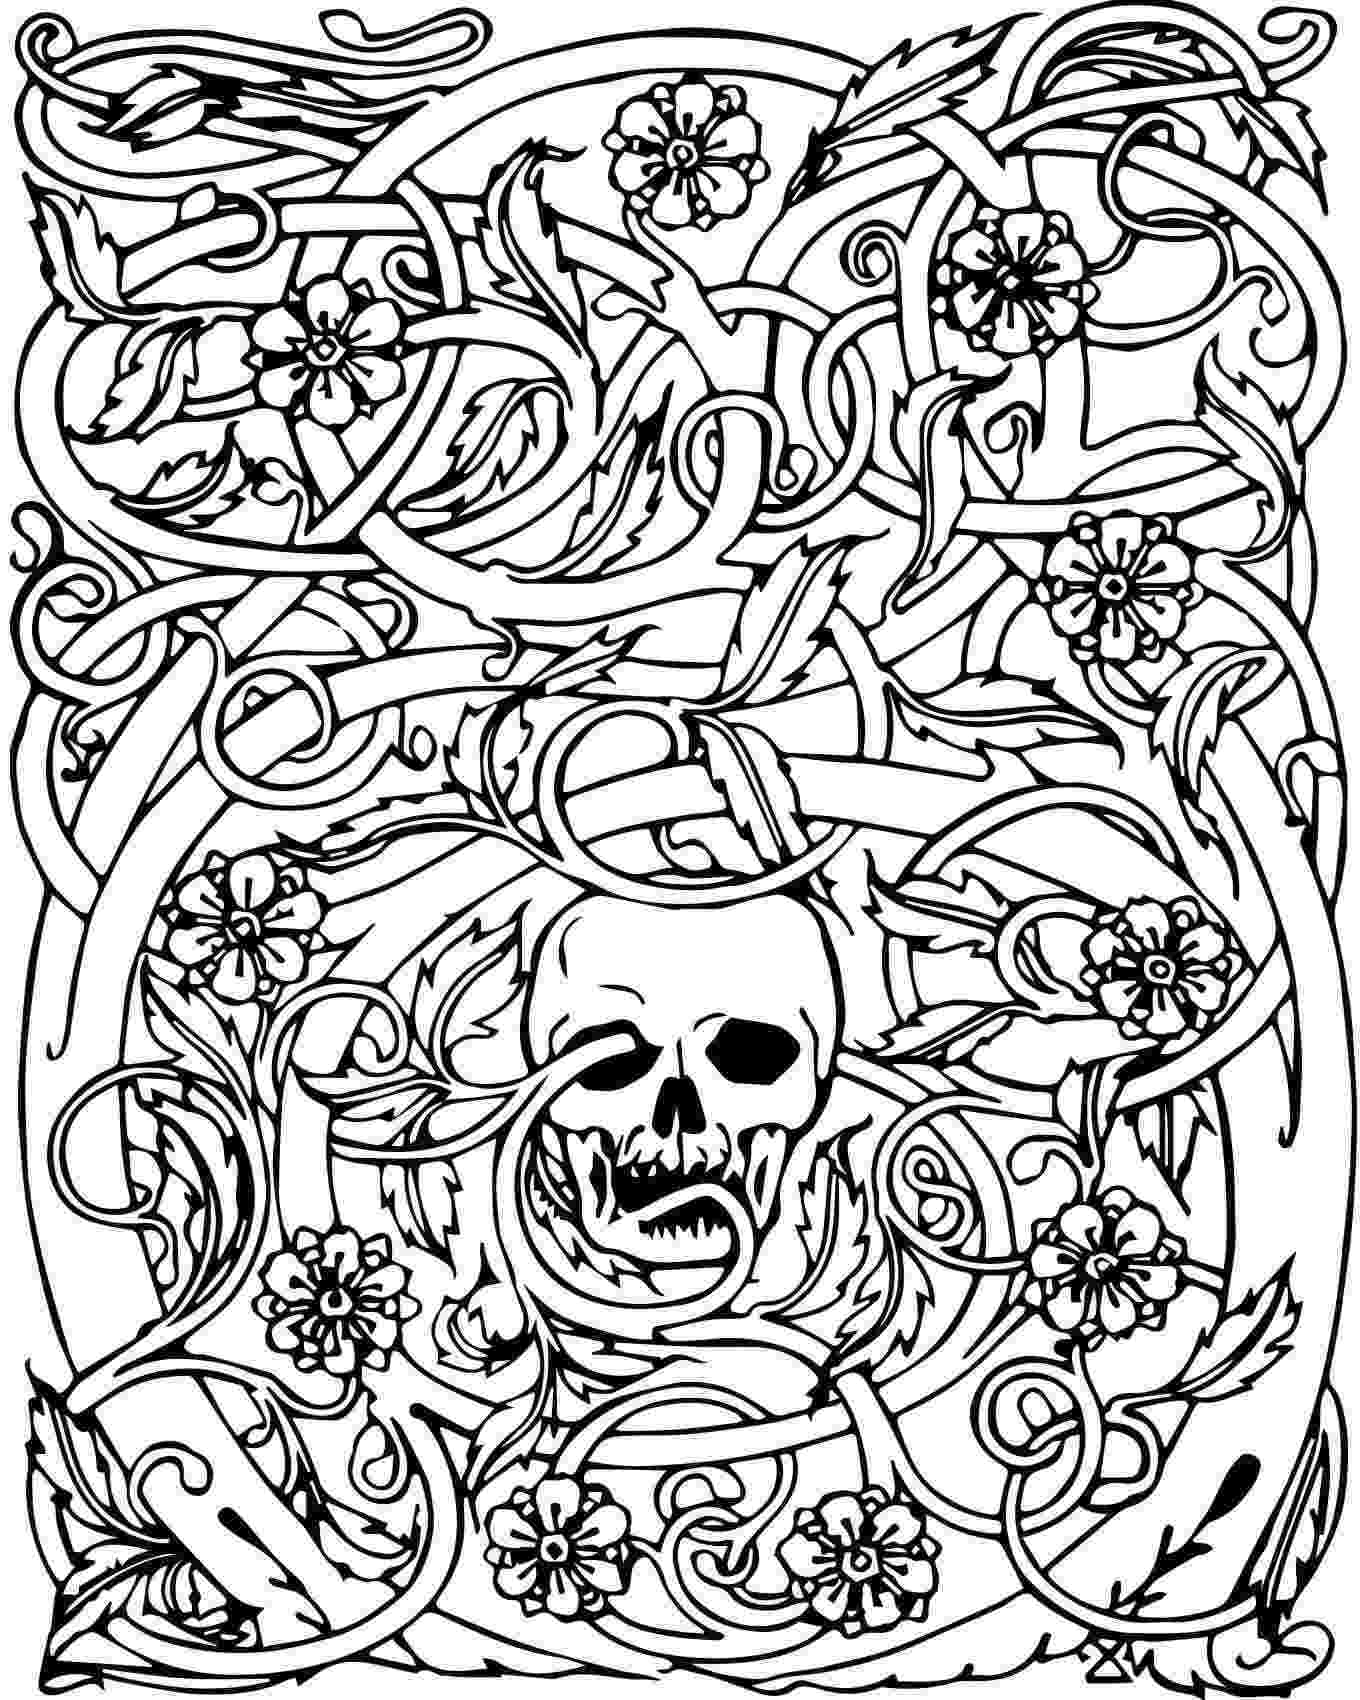 skull coloring sheet skull graffiti coloring pages coloring home skull sheet coloring 